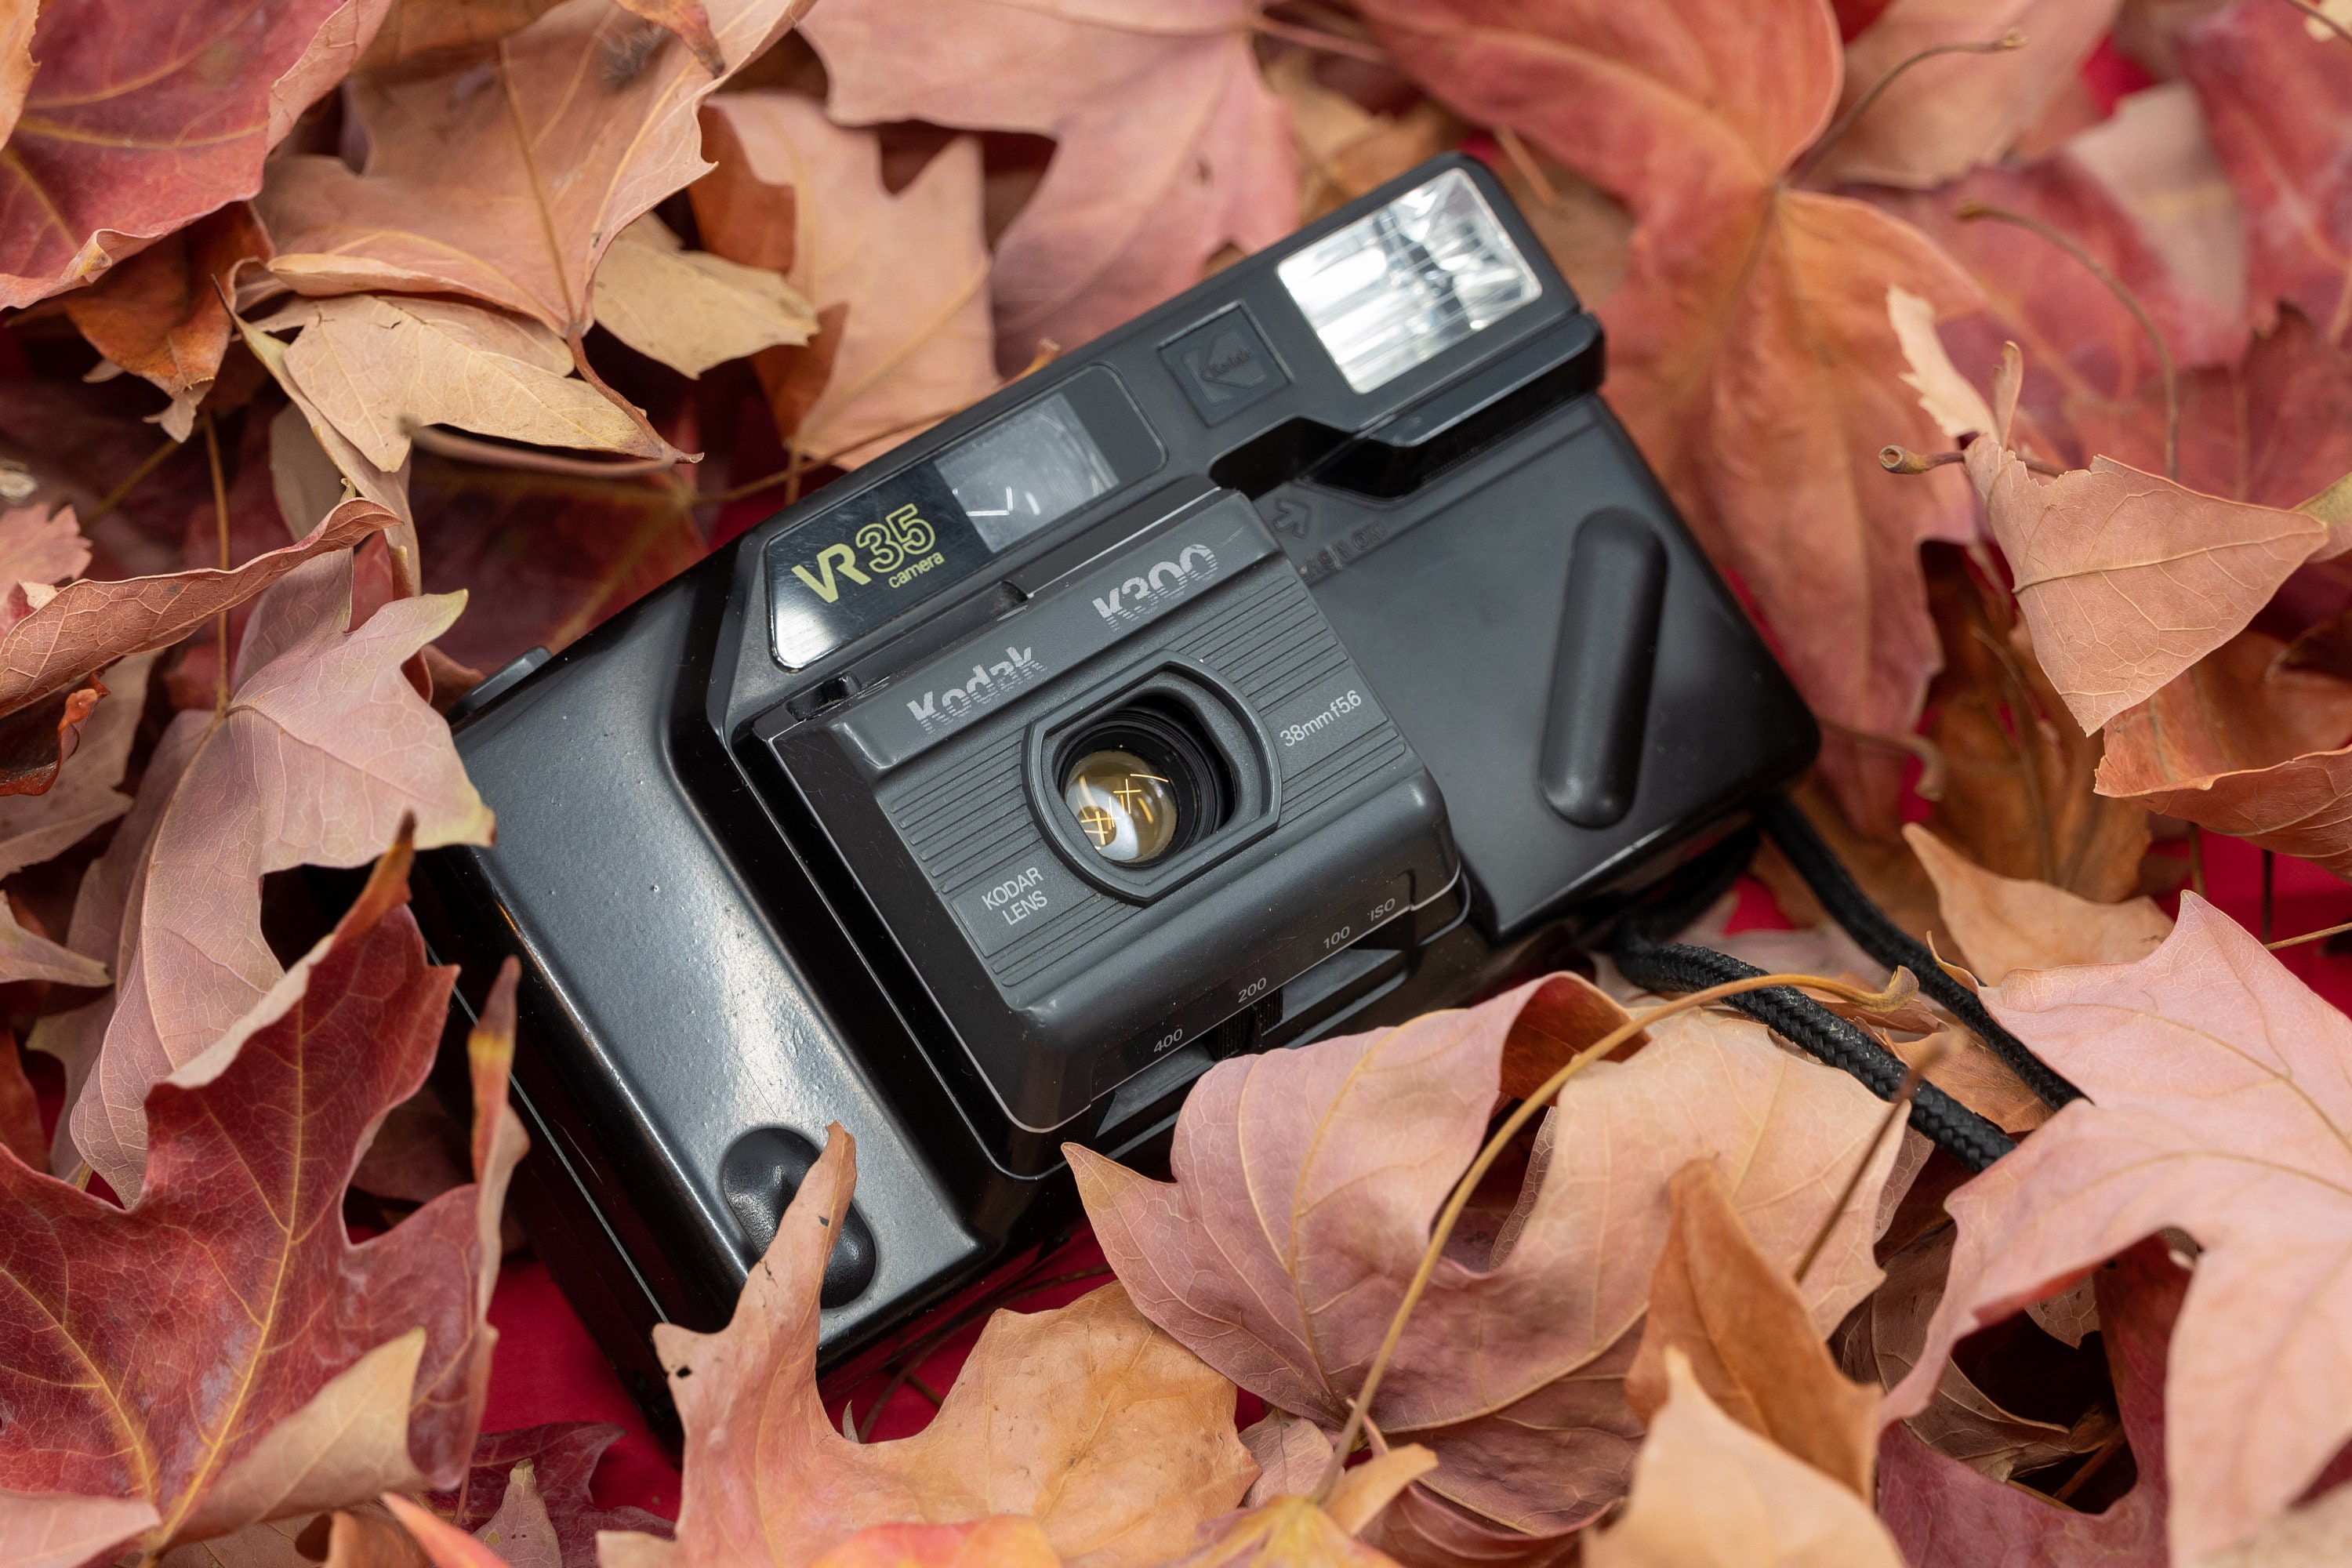 Kodak K80 VR35 Camera W/ Ektanar 1:3.9 Lens